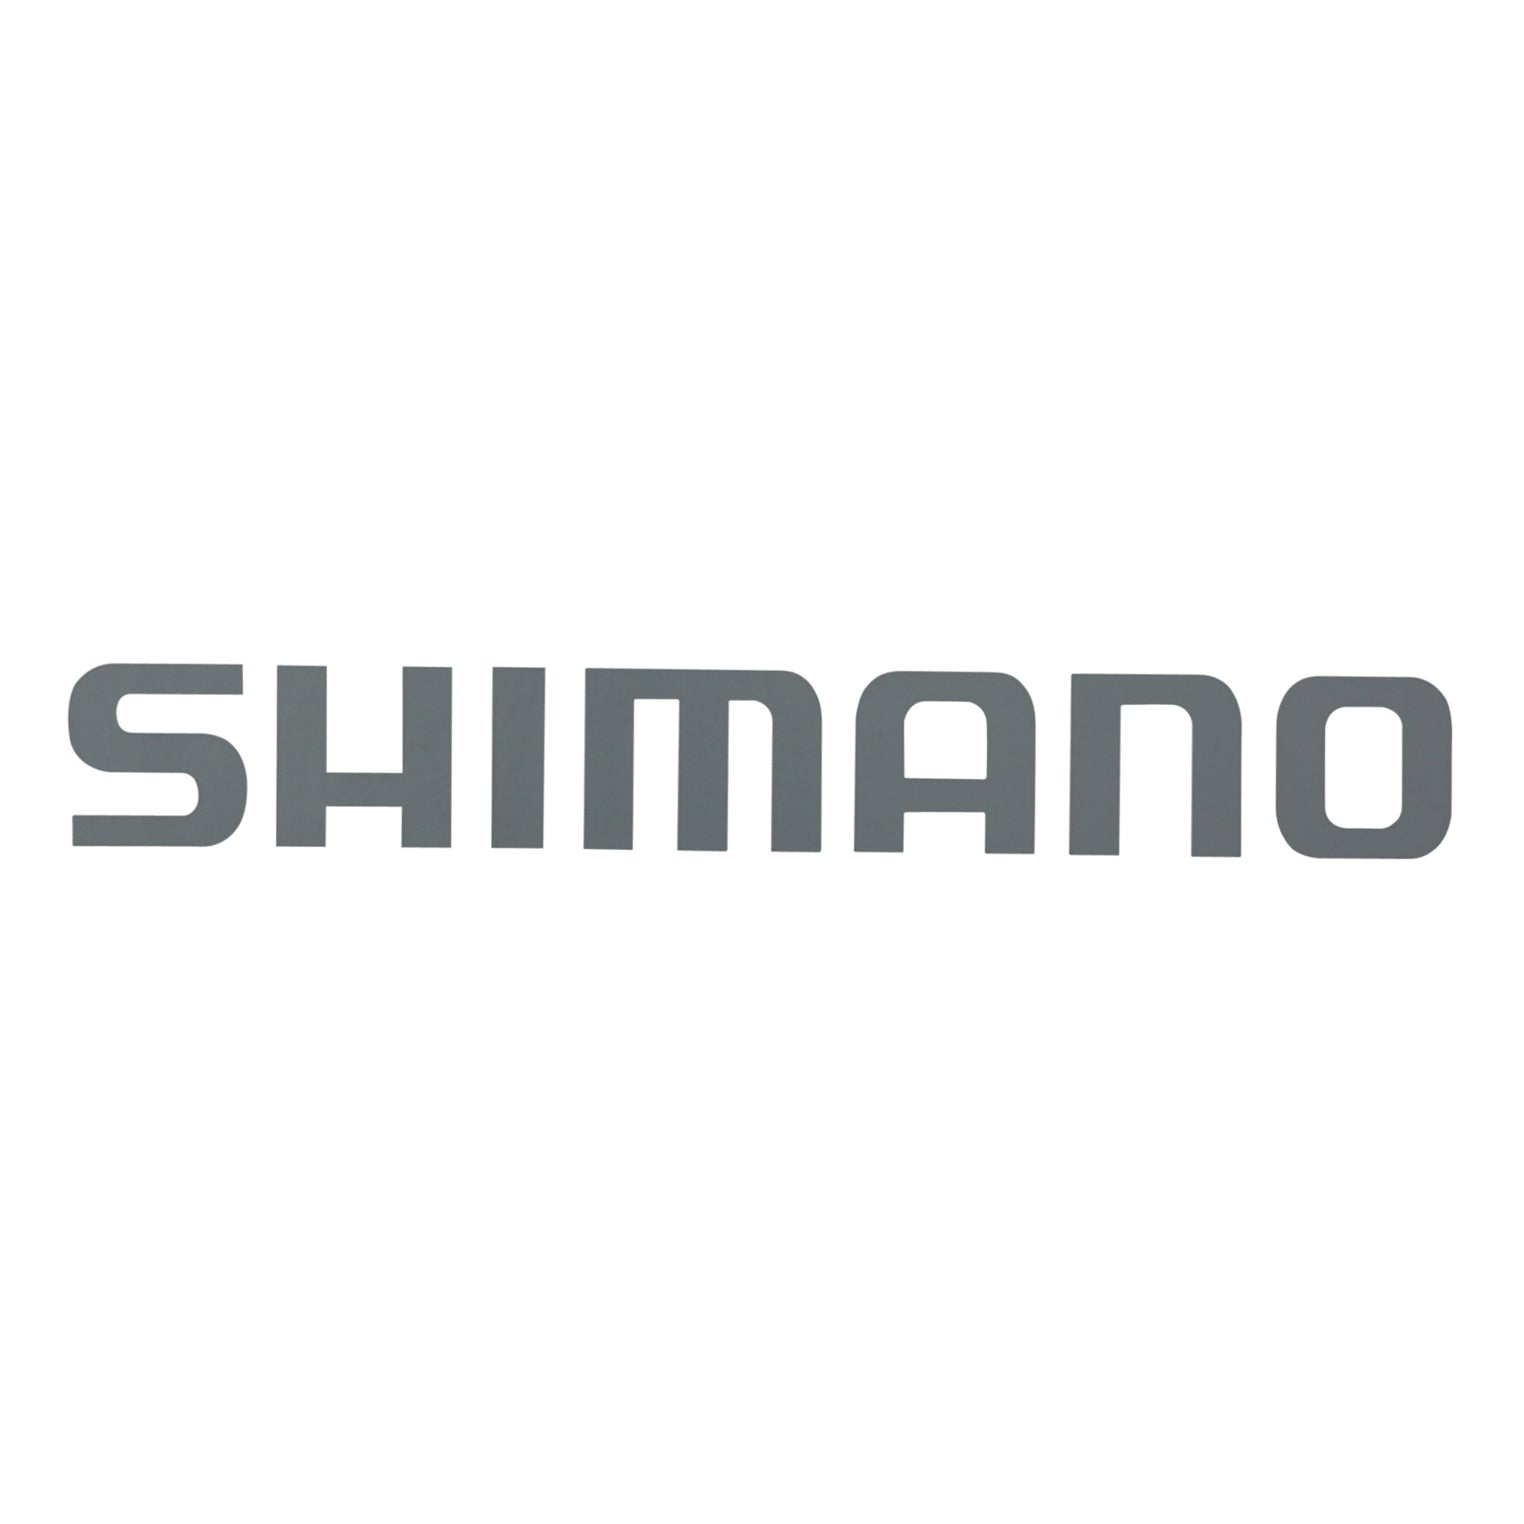 Shimano DECALLGY Decal Set, Large, Gray